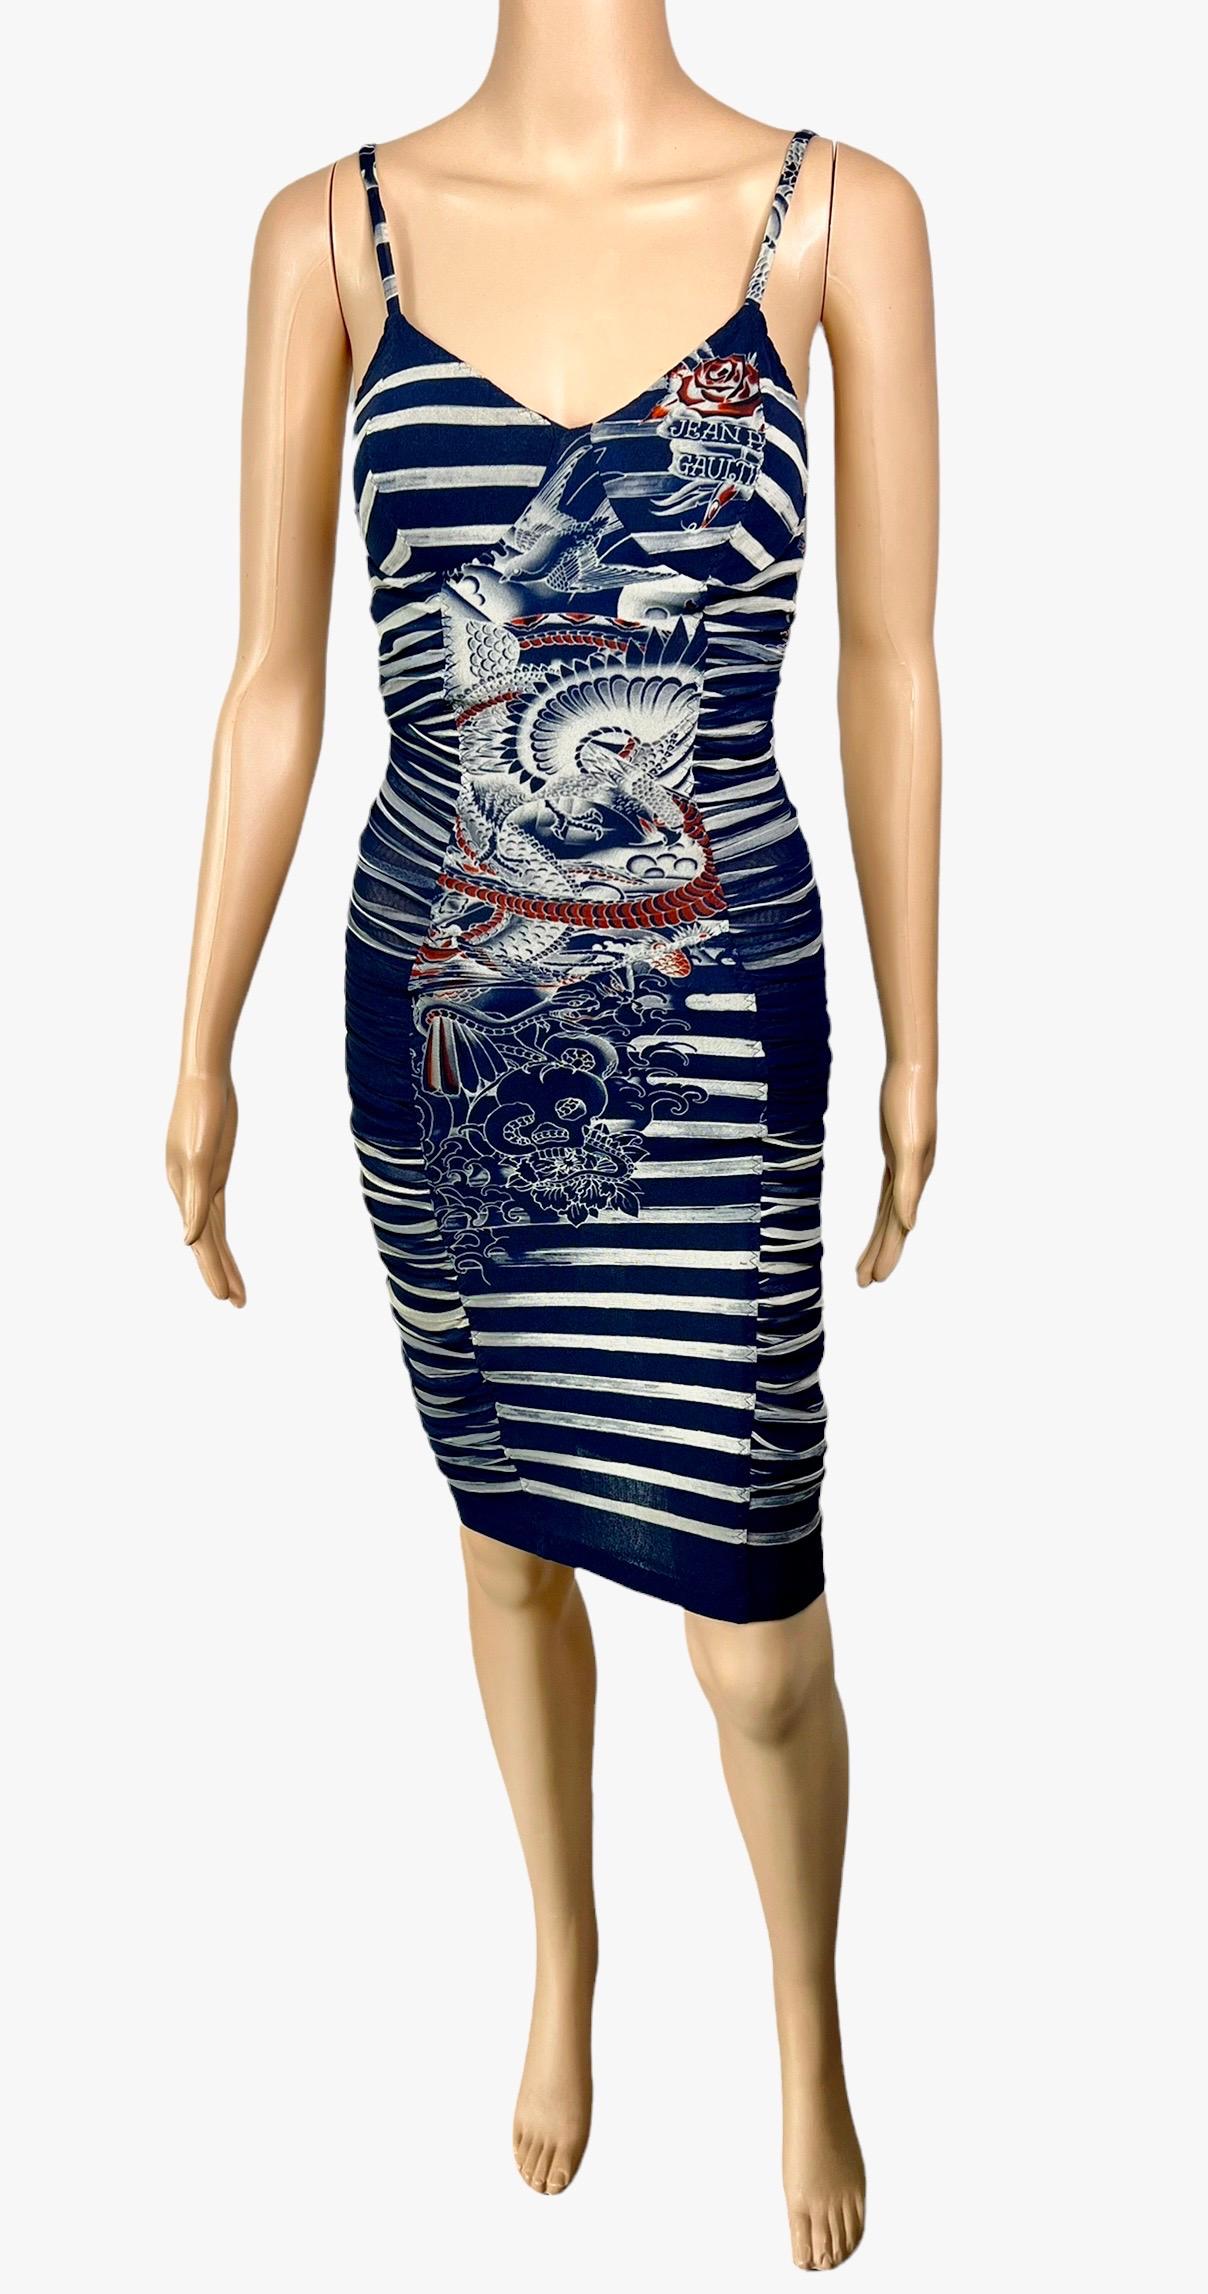 Jean Paul Gaultier Soleil S/S 2012 Tattoo Print Semi-Sheer Mesh Bodycon Dress 1